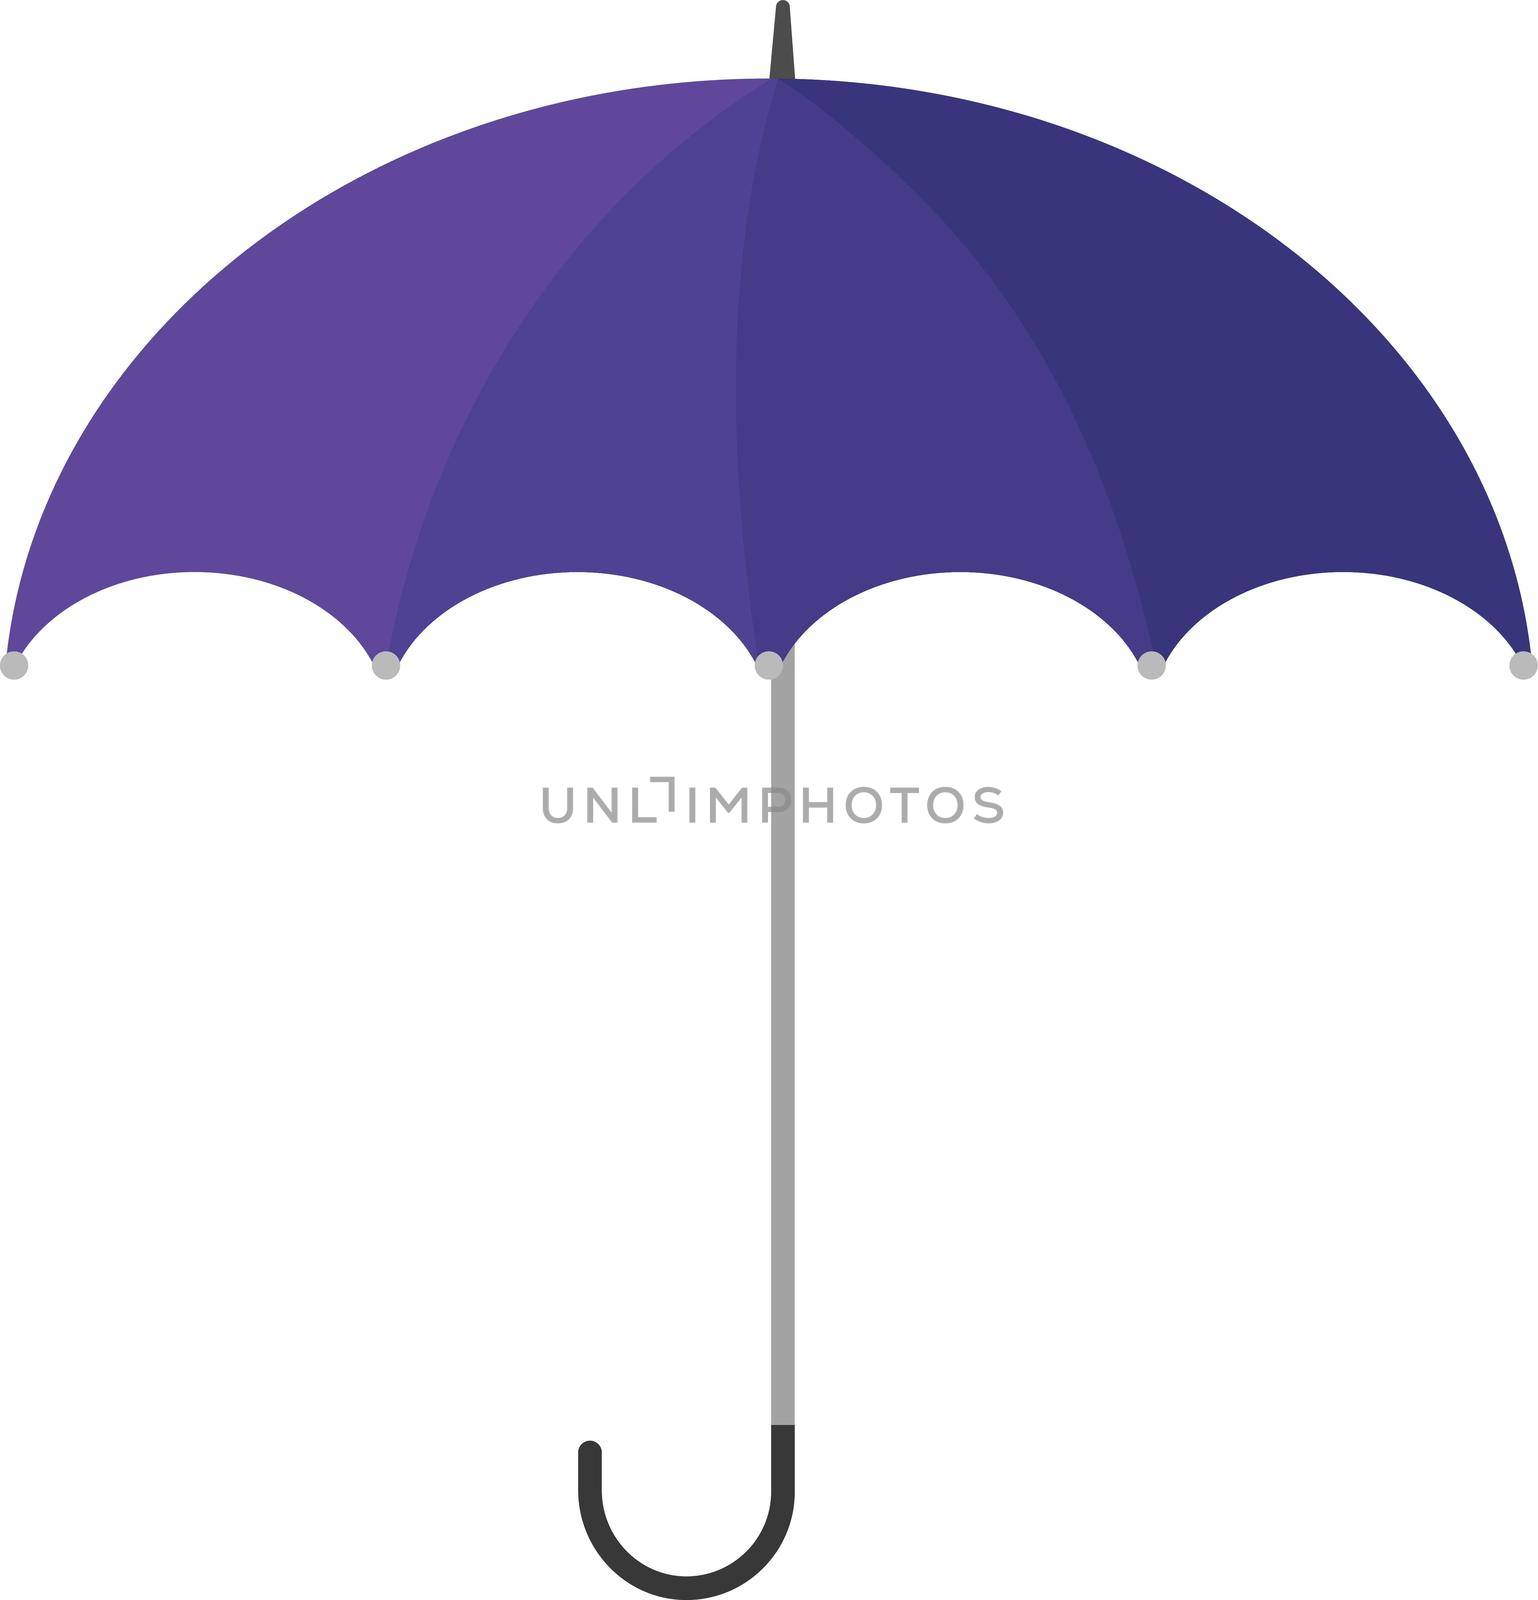 Purple umbrella, illustration, vector on white background.